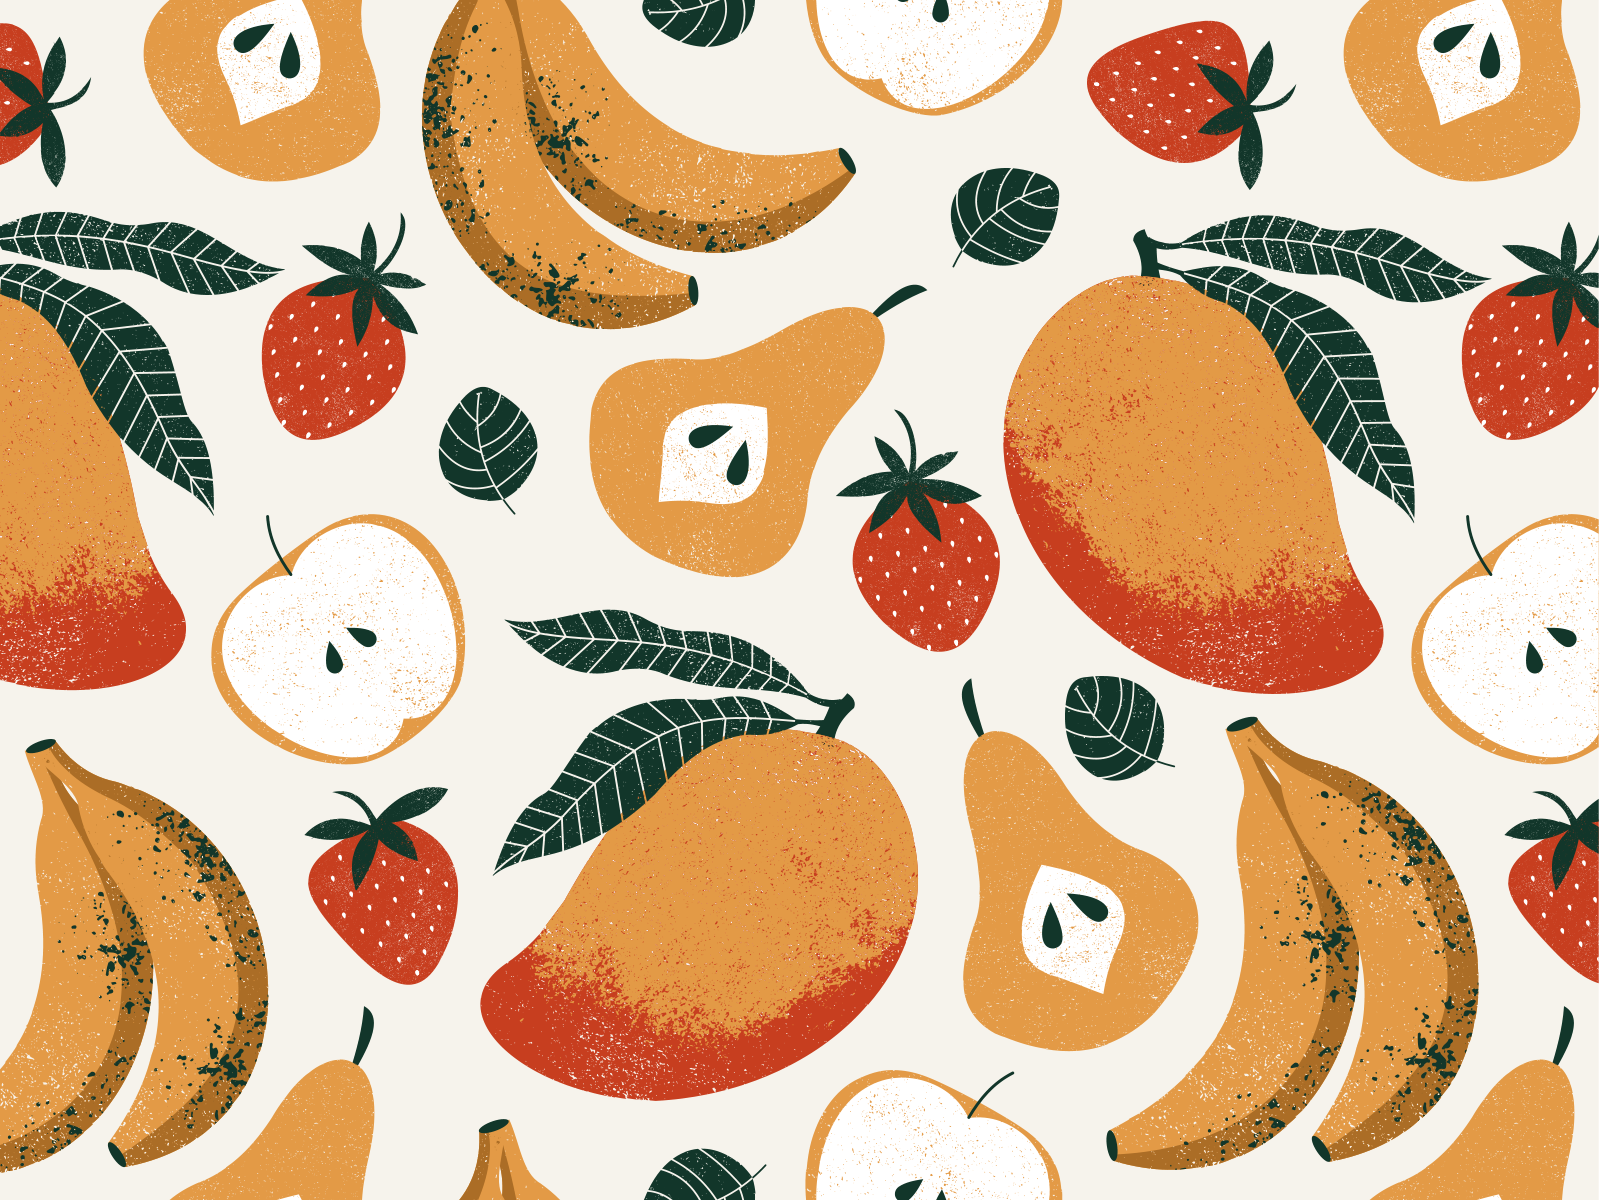 Fruit seamless pattern by Mary Zabaikina on Dribbble